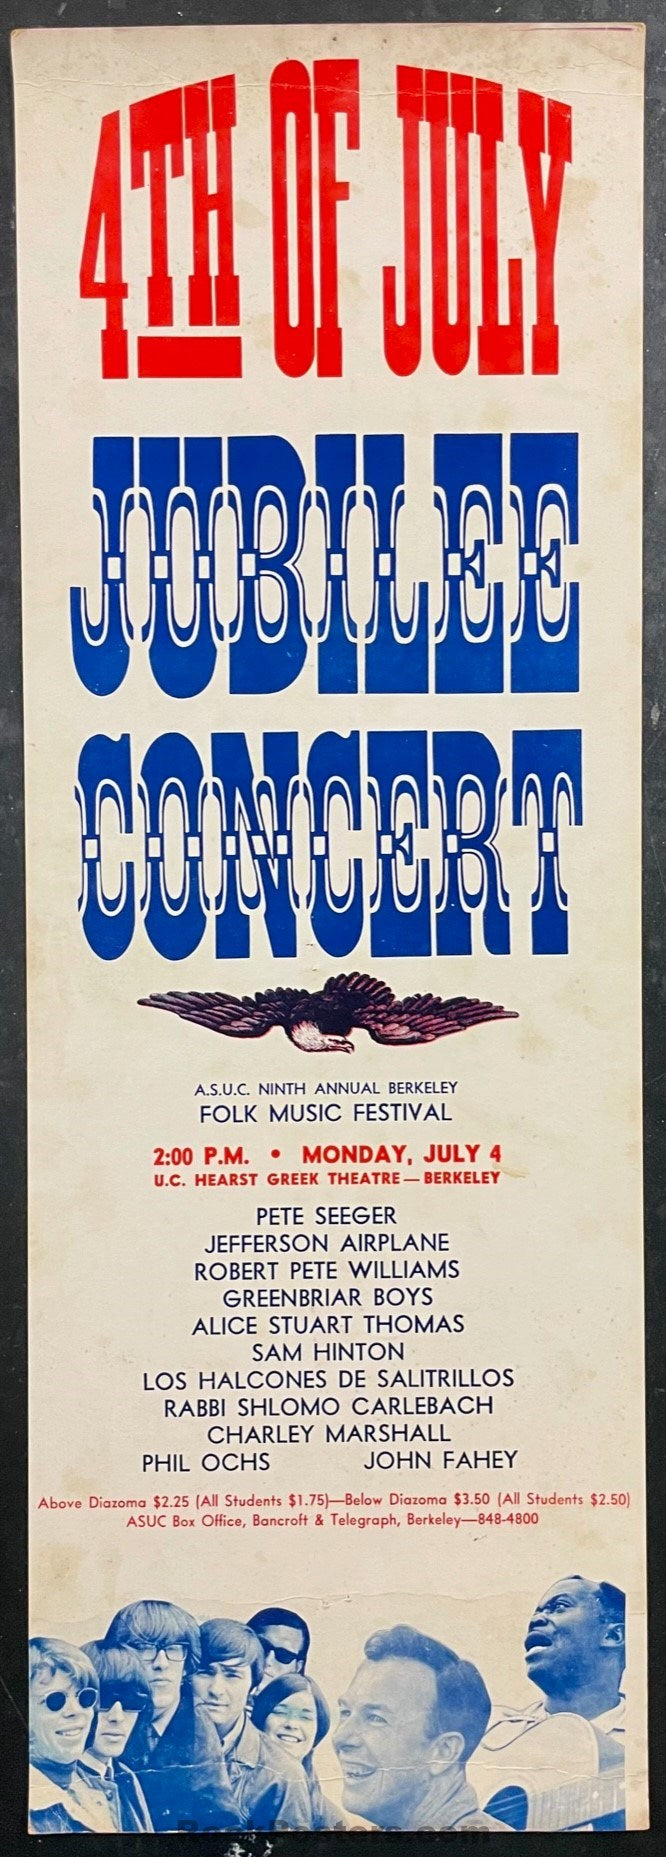 AUCTION - AOR 1.89 - Jefferson Airplane - Phil Ochs - 1966 Poster - Berkeley Folk Festival - Excellent